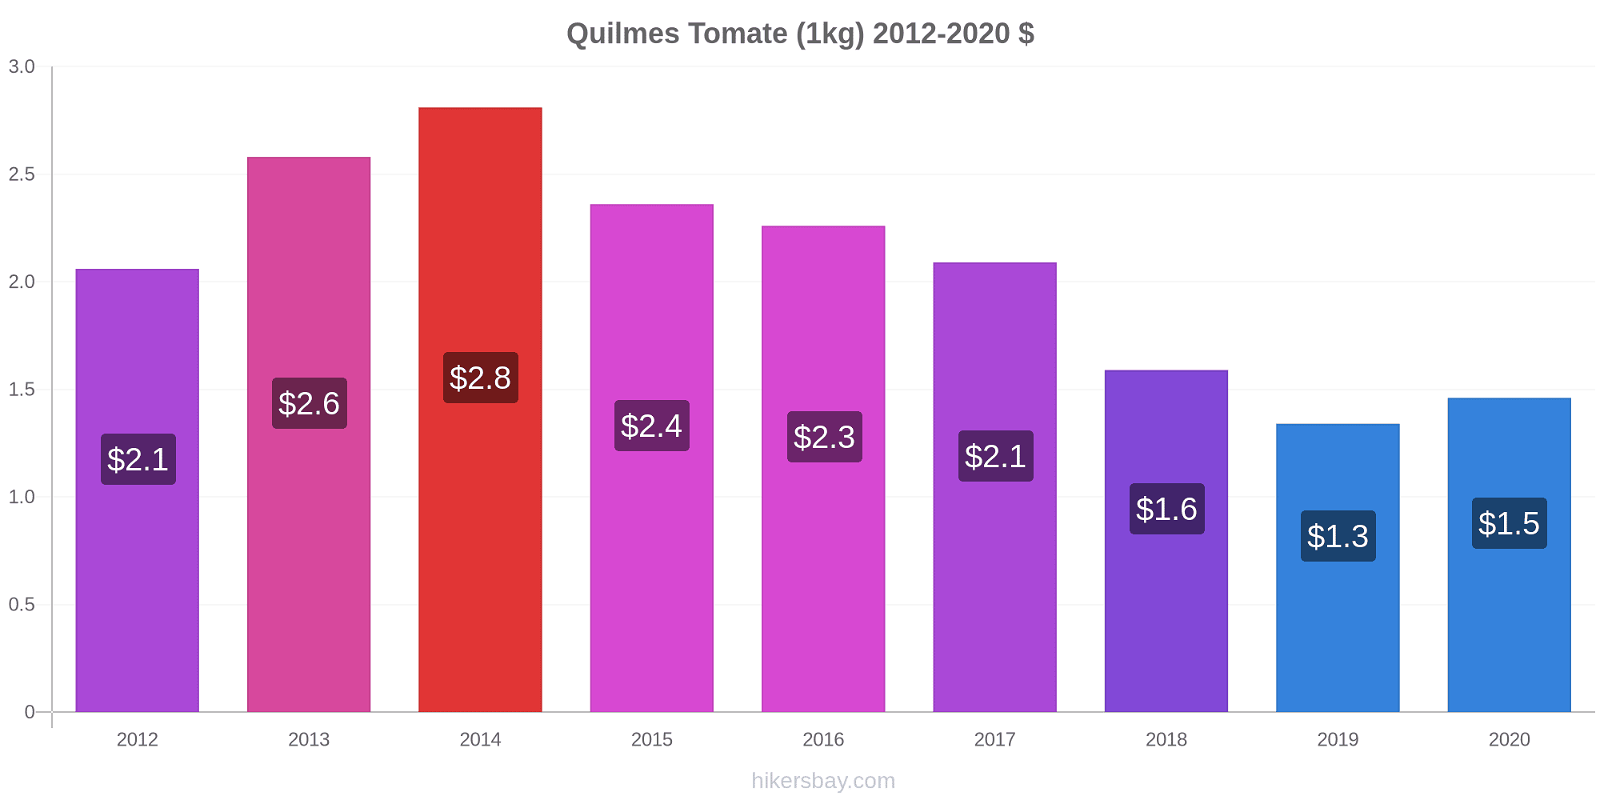 Quilmes Preisänderungen Tomaten (1kg) hikersbay.com